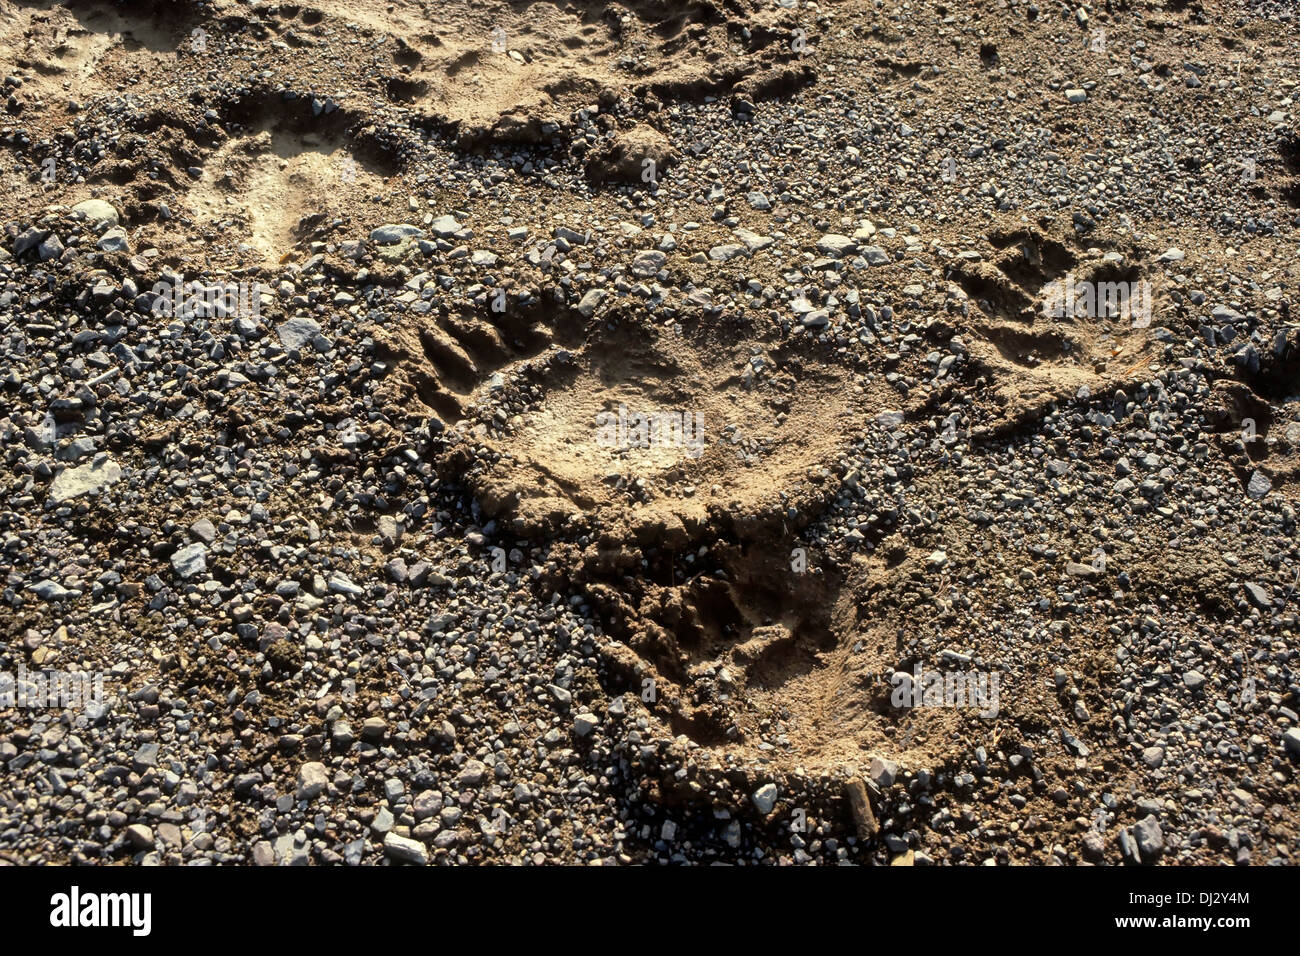 Footprint dell'orso bruno, l'orso bruno (Ursus arctos), Fußspur des Braunbärs, Braunbär (Ursus arctos) Foto Stock